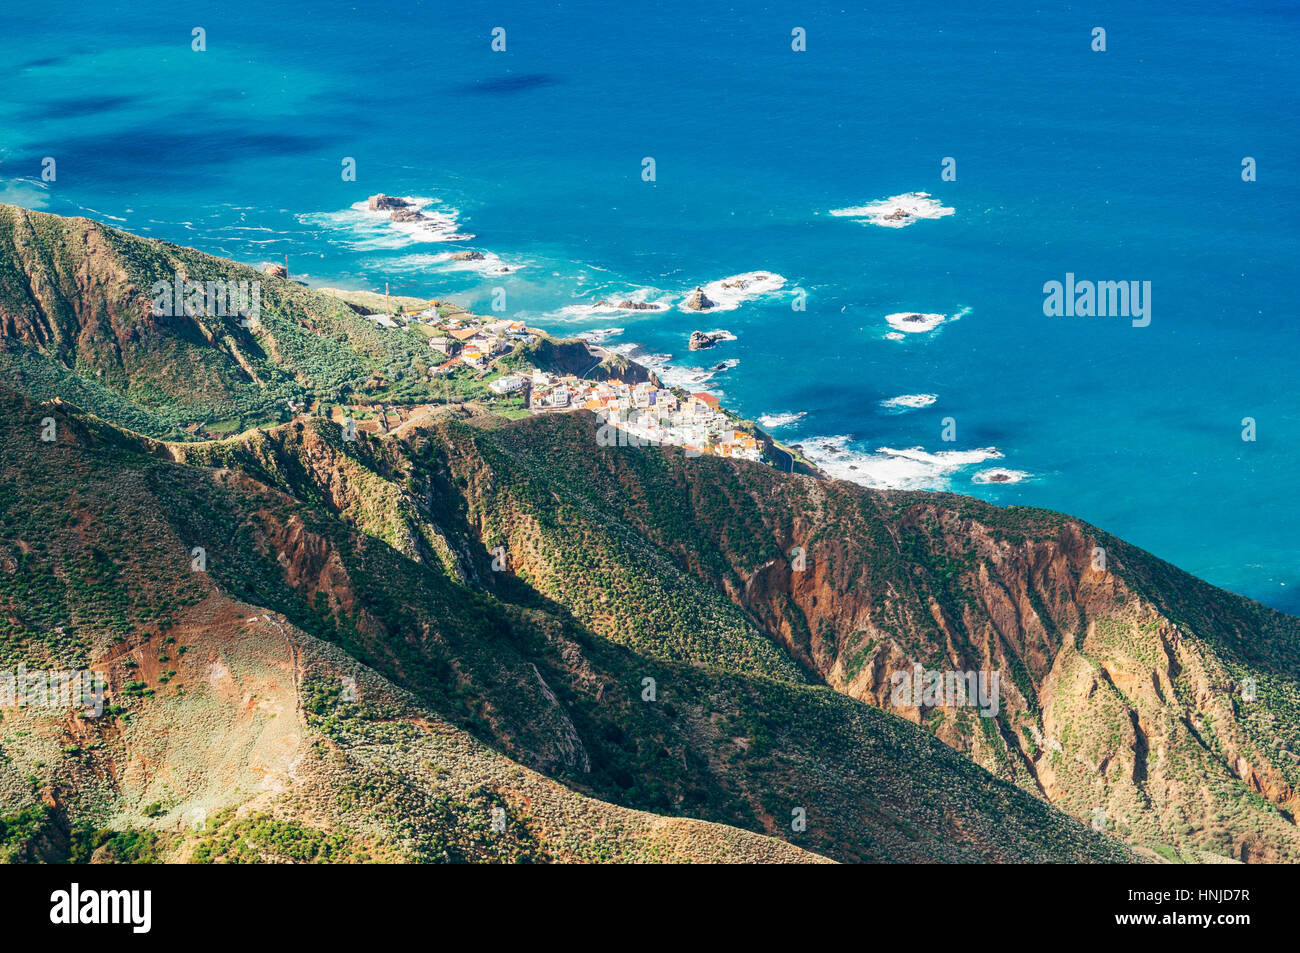 Vue de dessus sur l'almaciga village de montagnes d'Anaga, Tenerife, Espagne Banque D'Images